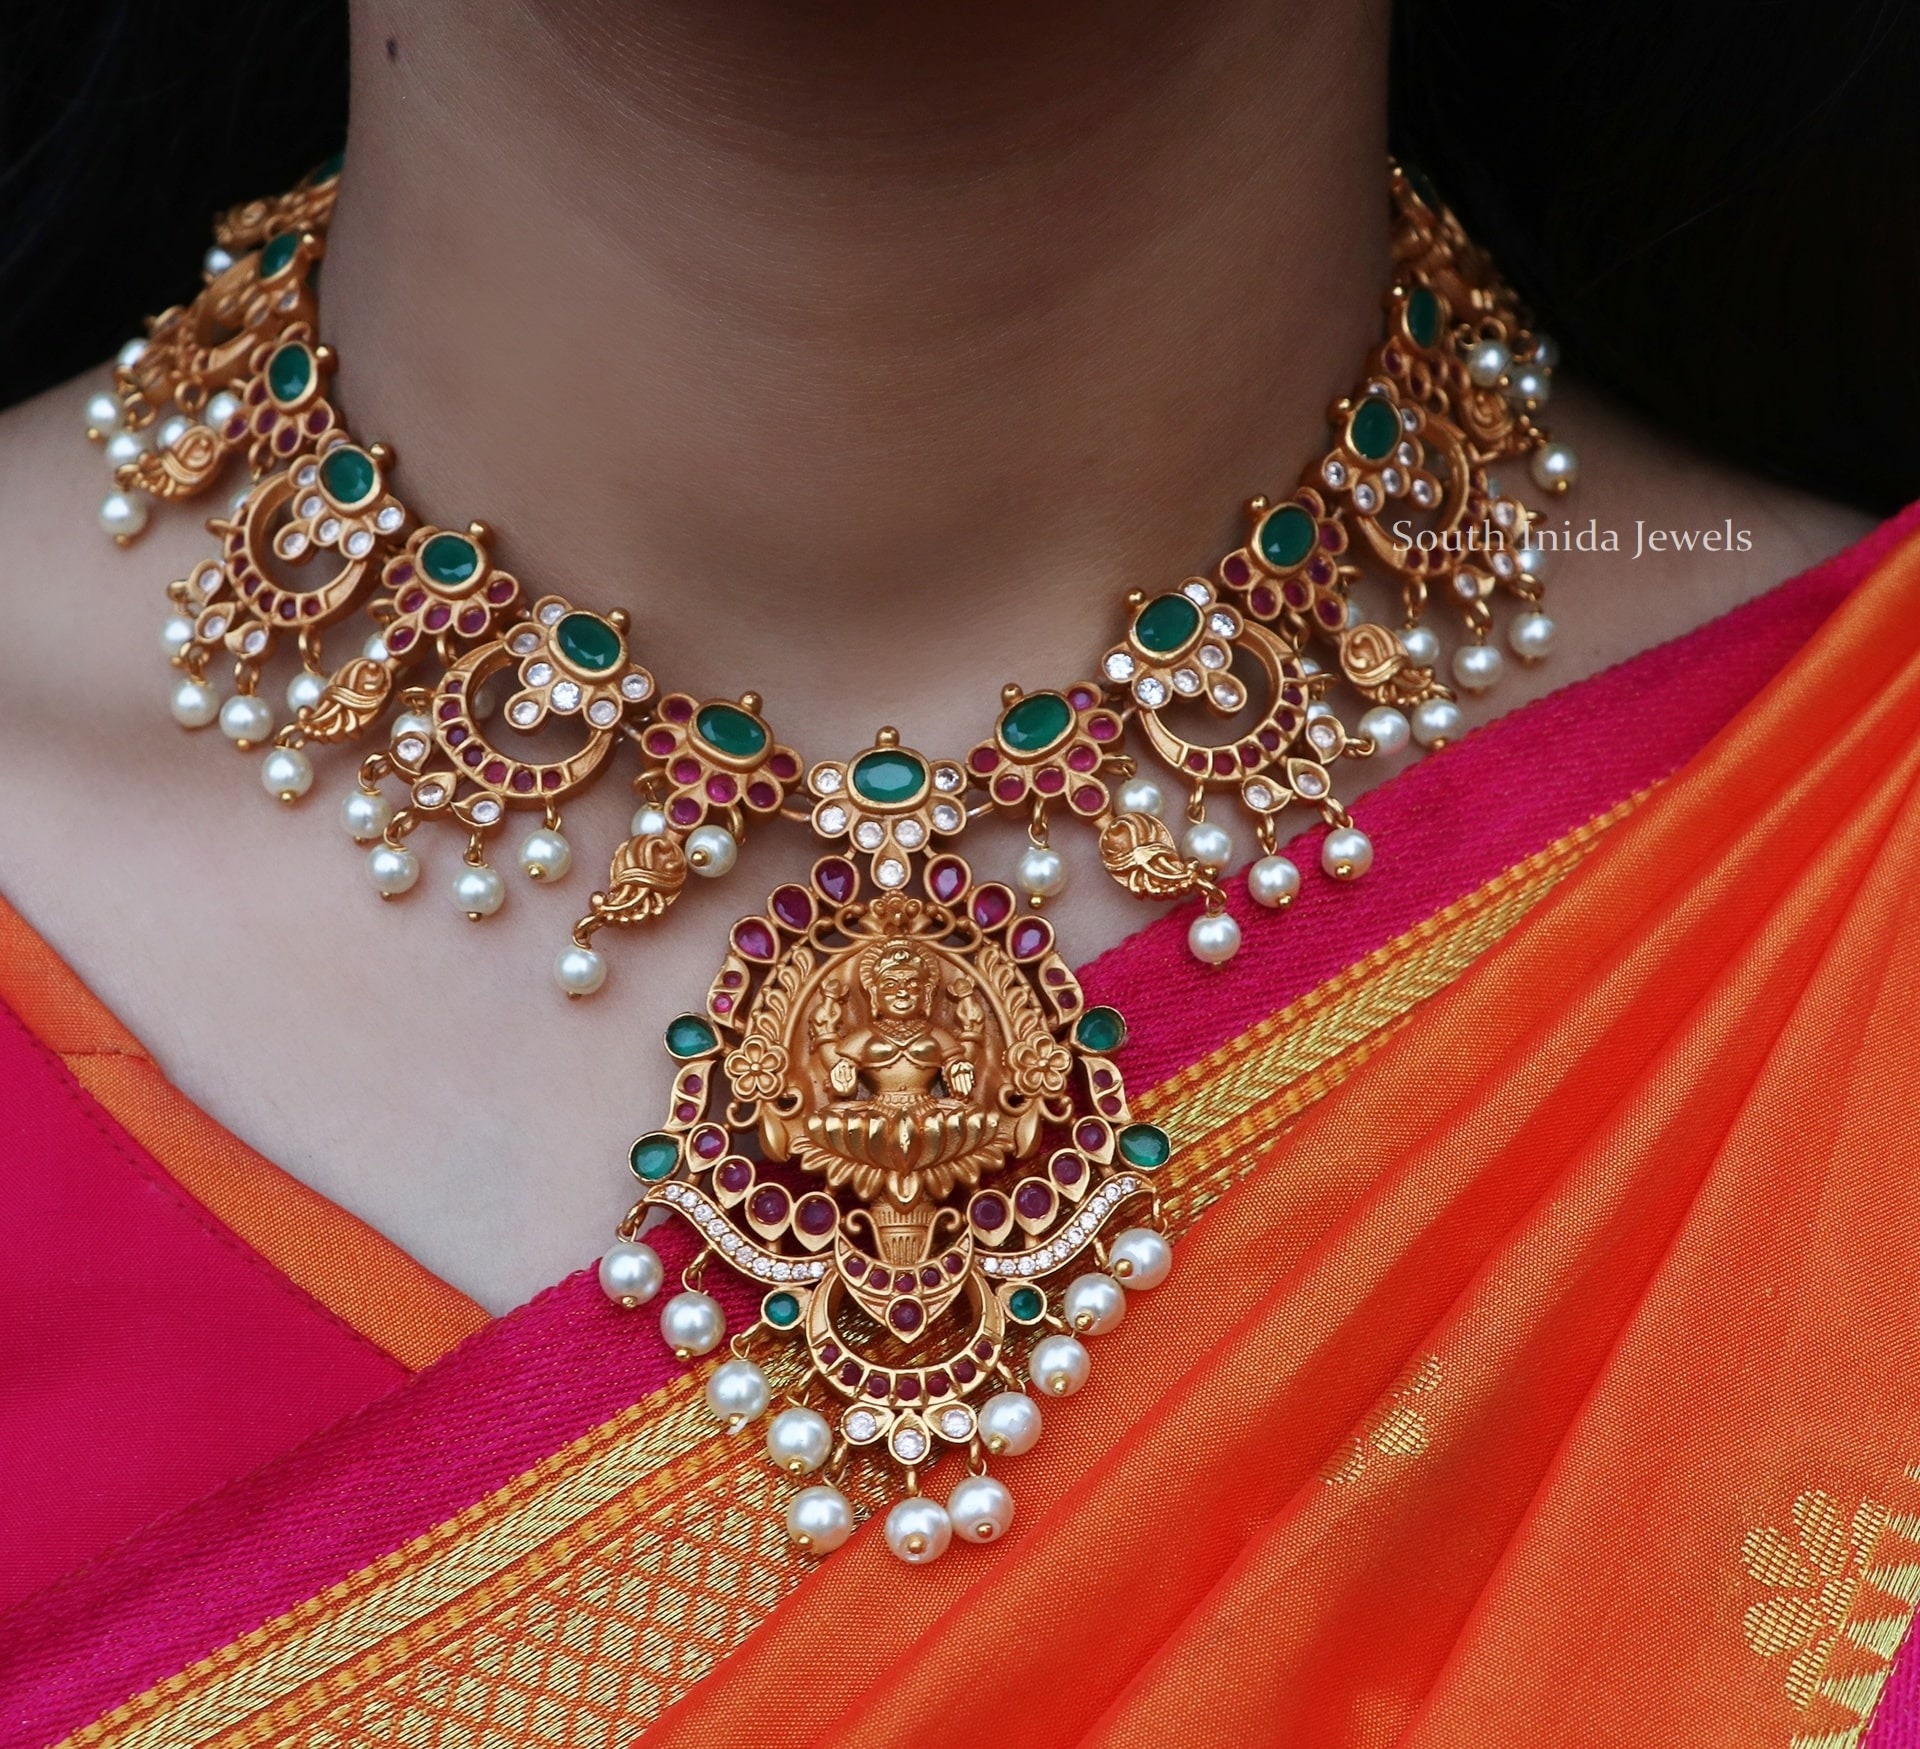 Chandbali Design Lakshmi Necklace - South Inida Jewels